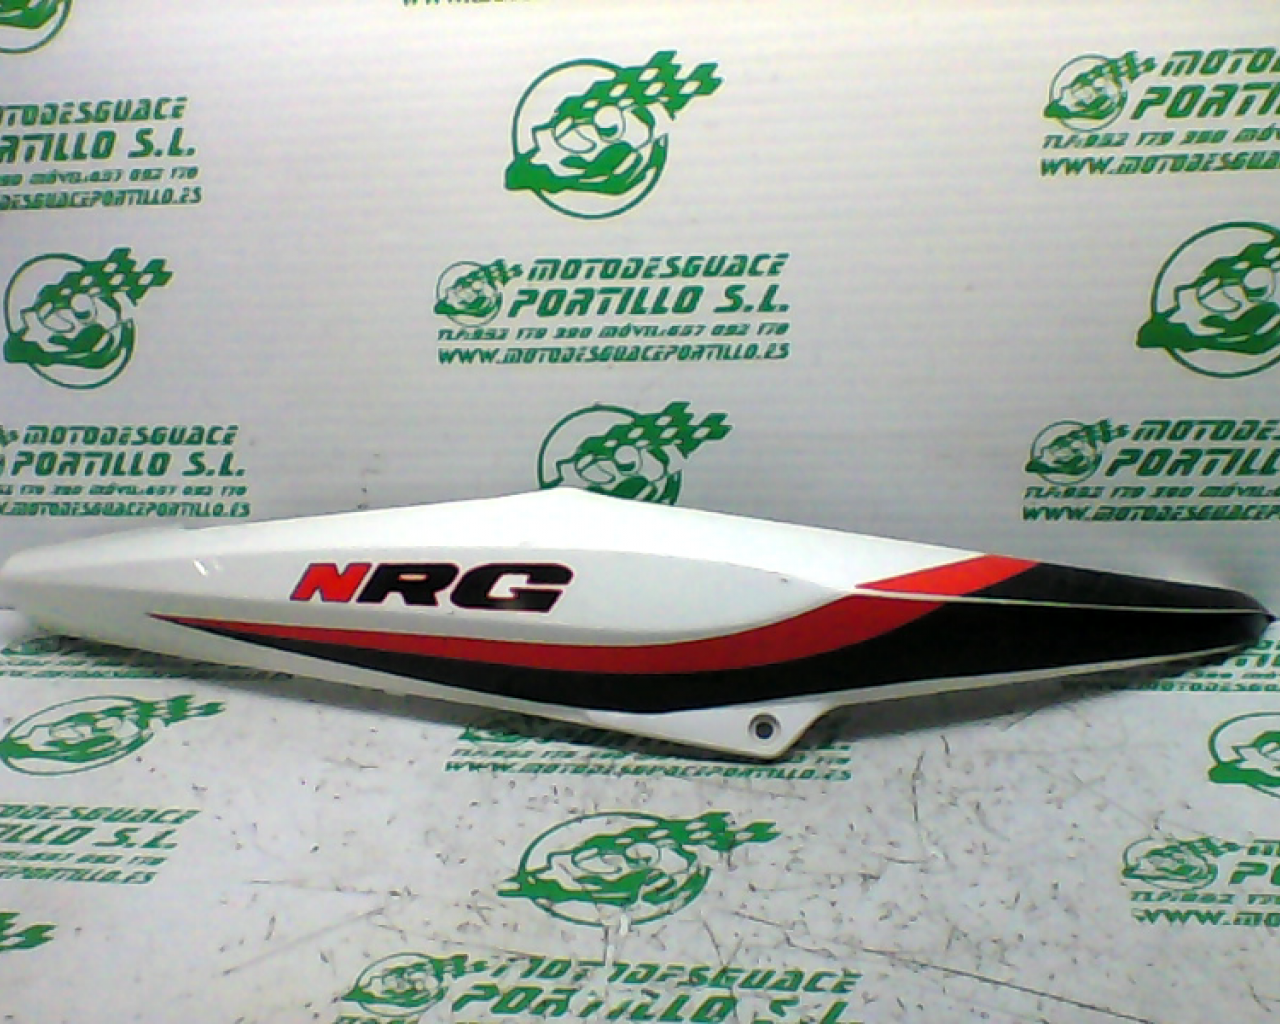 Carcasa lateral trasera derecha Piaggio NRG Power   50 (2007-2009)